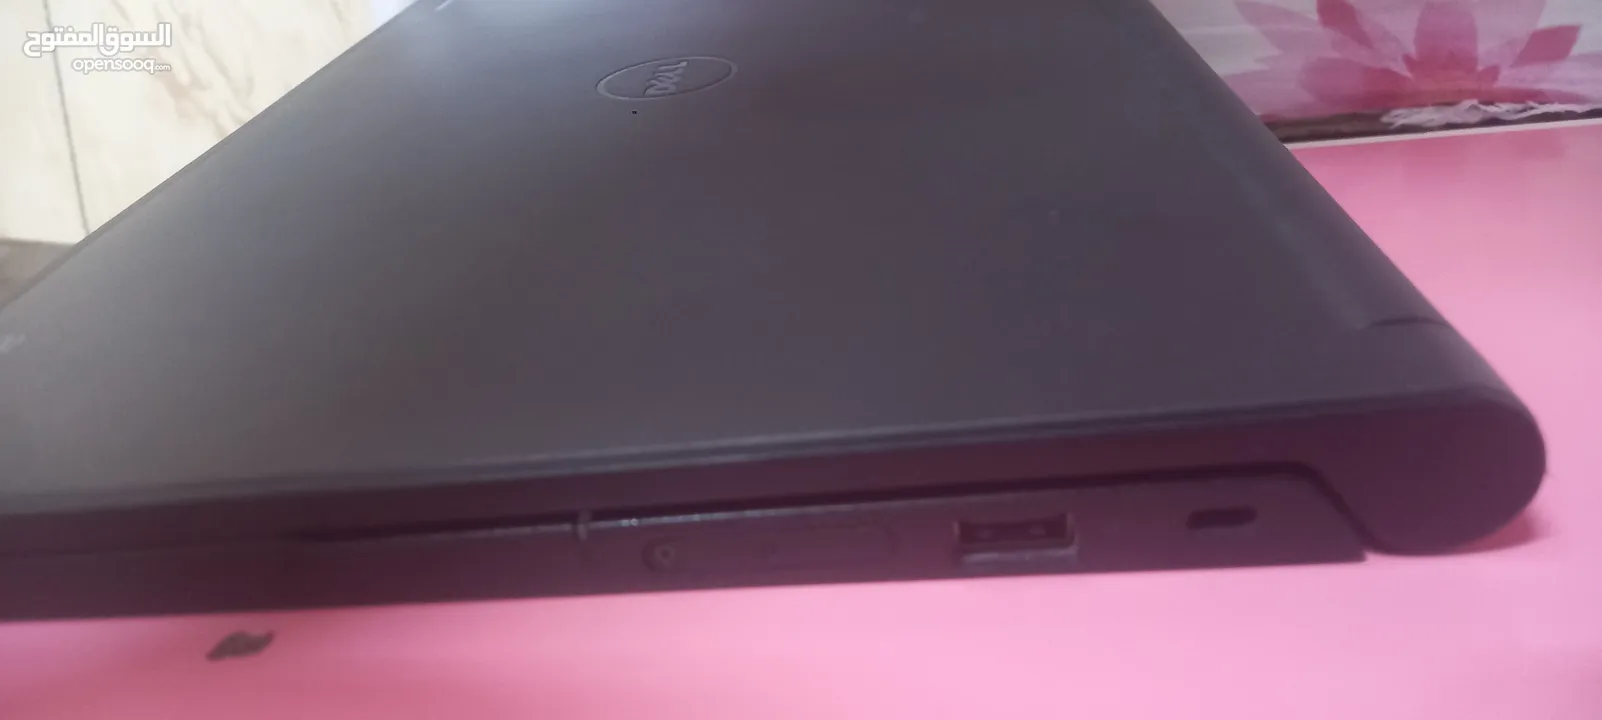 Dell chromebook 11 laptop